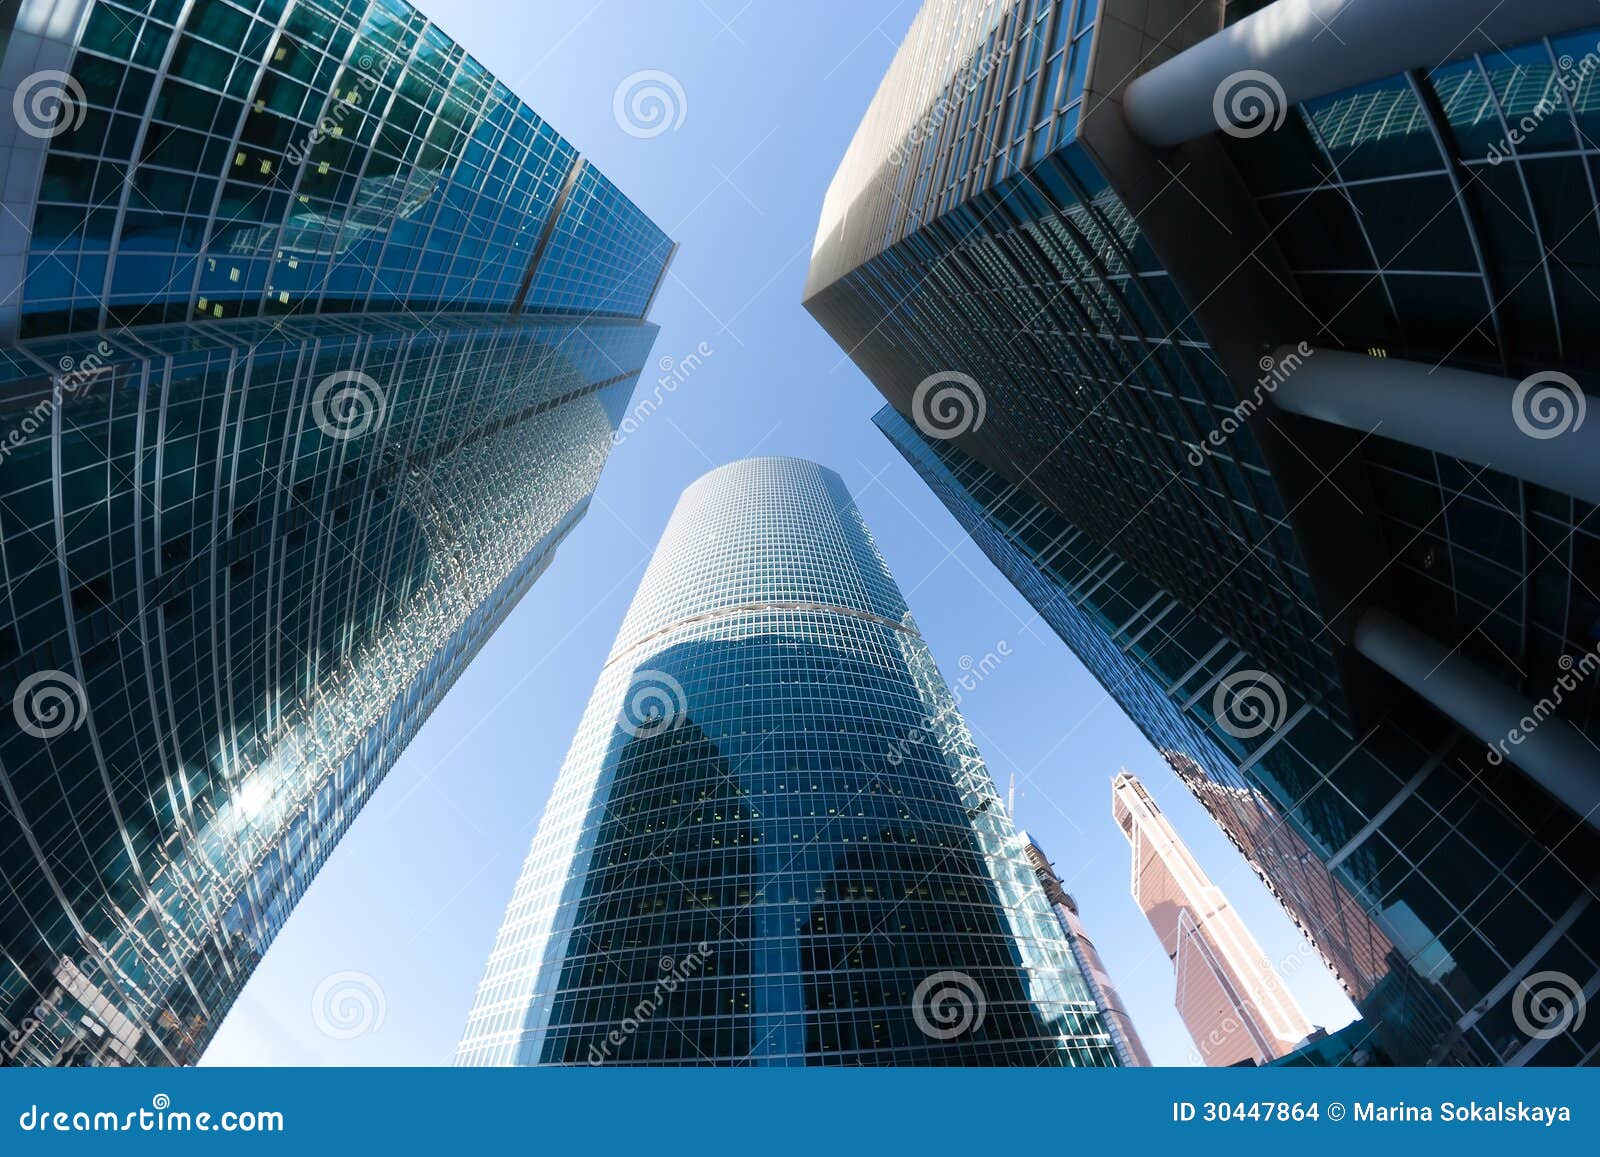 corporate office skyscrapers perspective